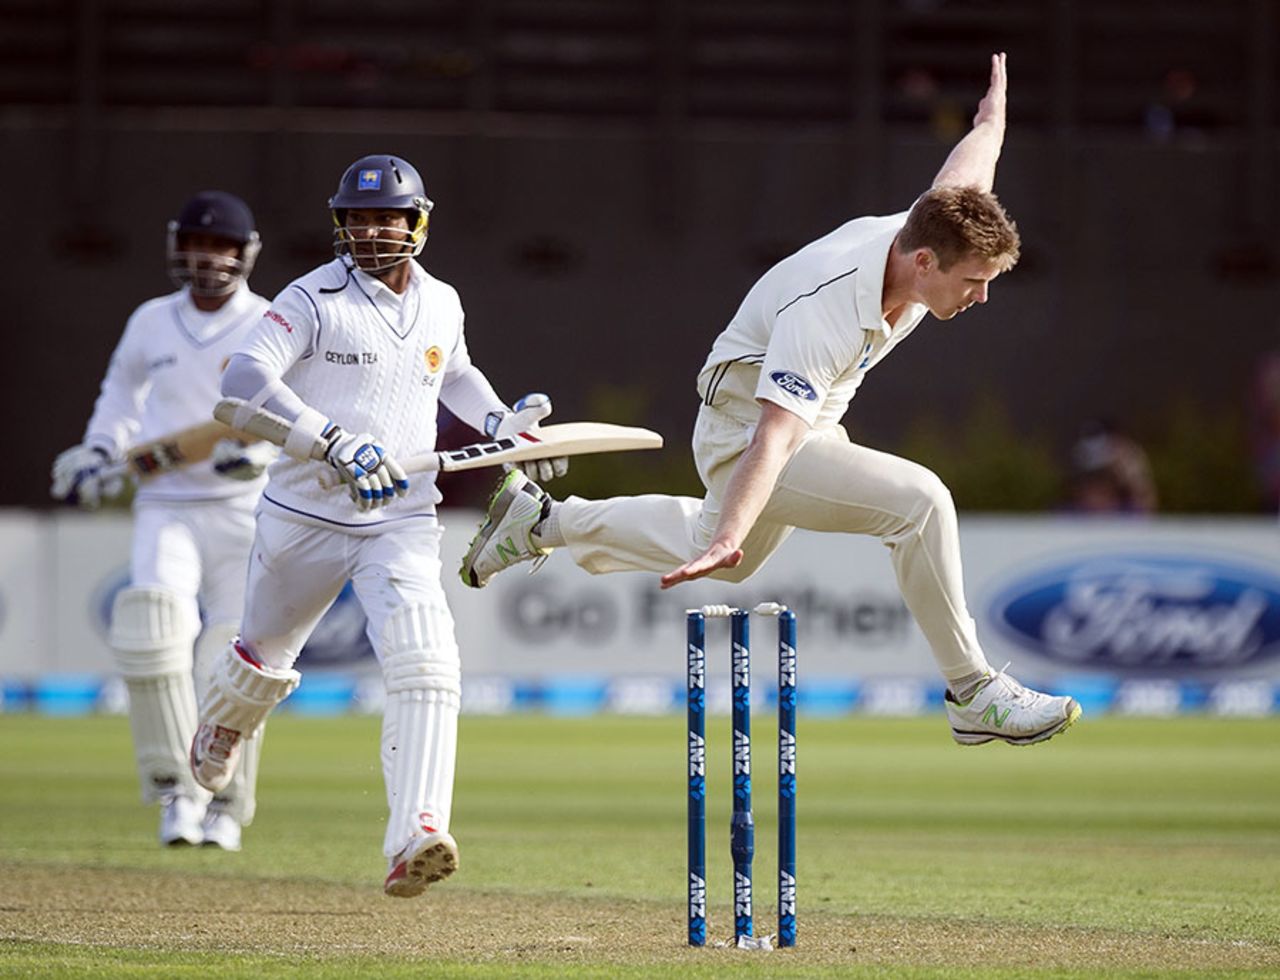 James Neesham hurdles the stumps, New Zealand v Sri Lanka, 2nd Test, Wellington, 1st day, January 3, 2015